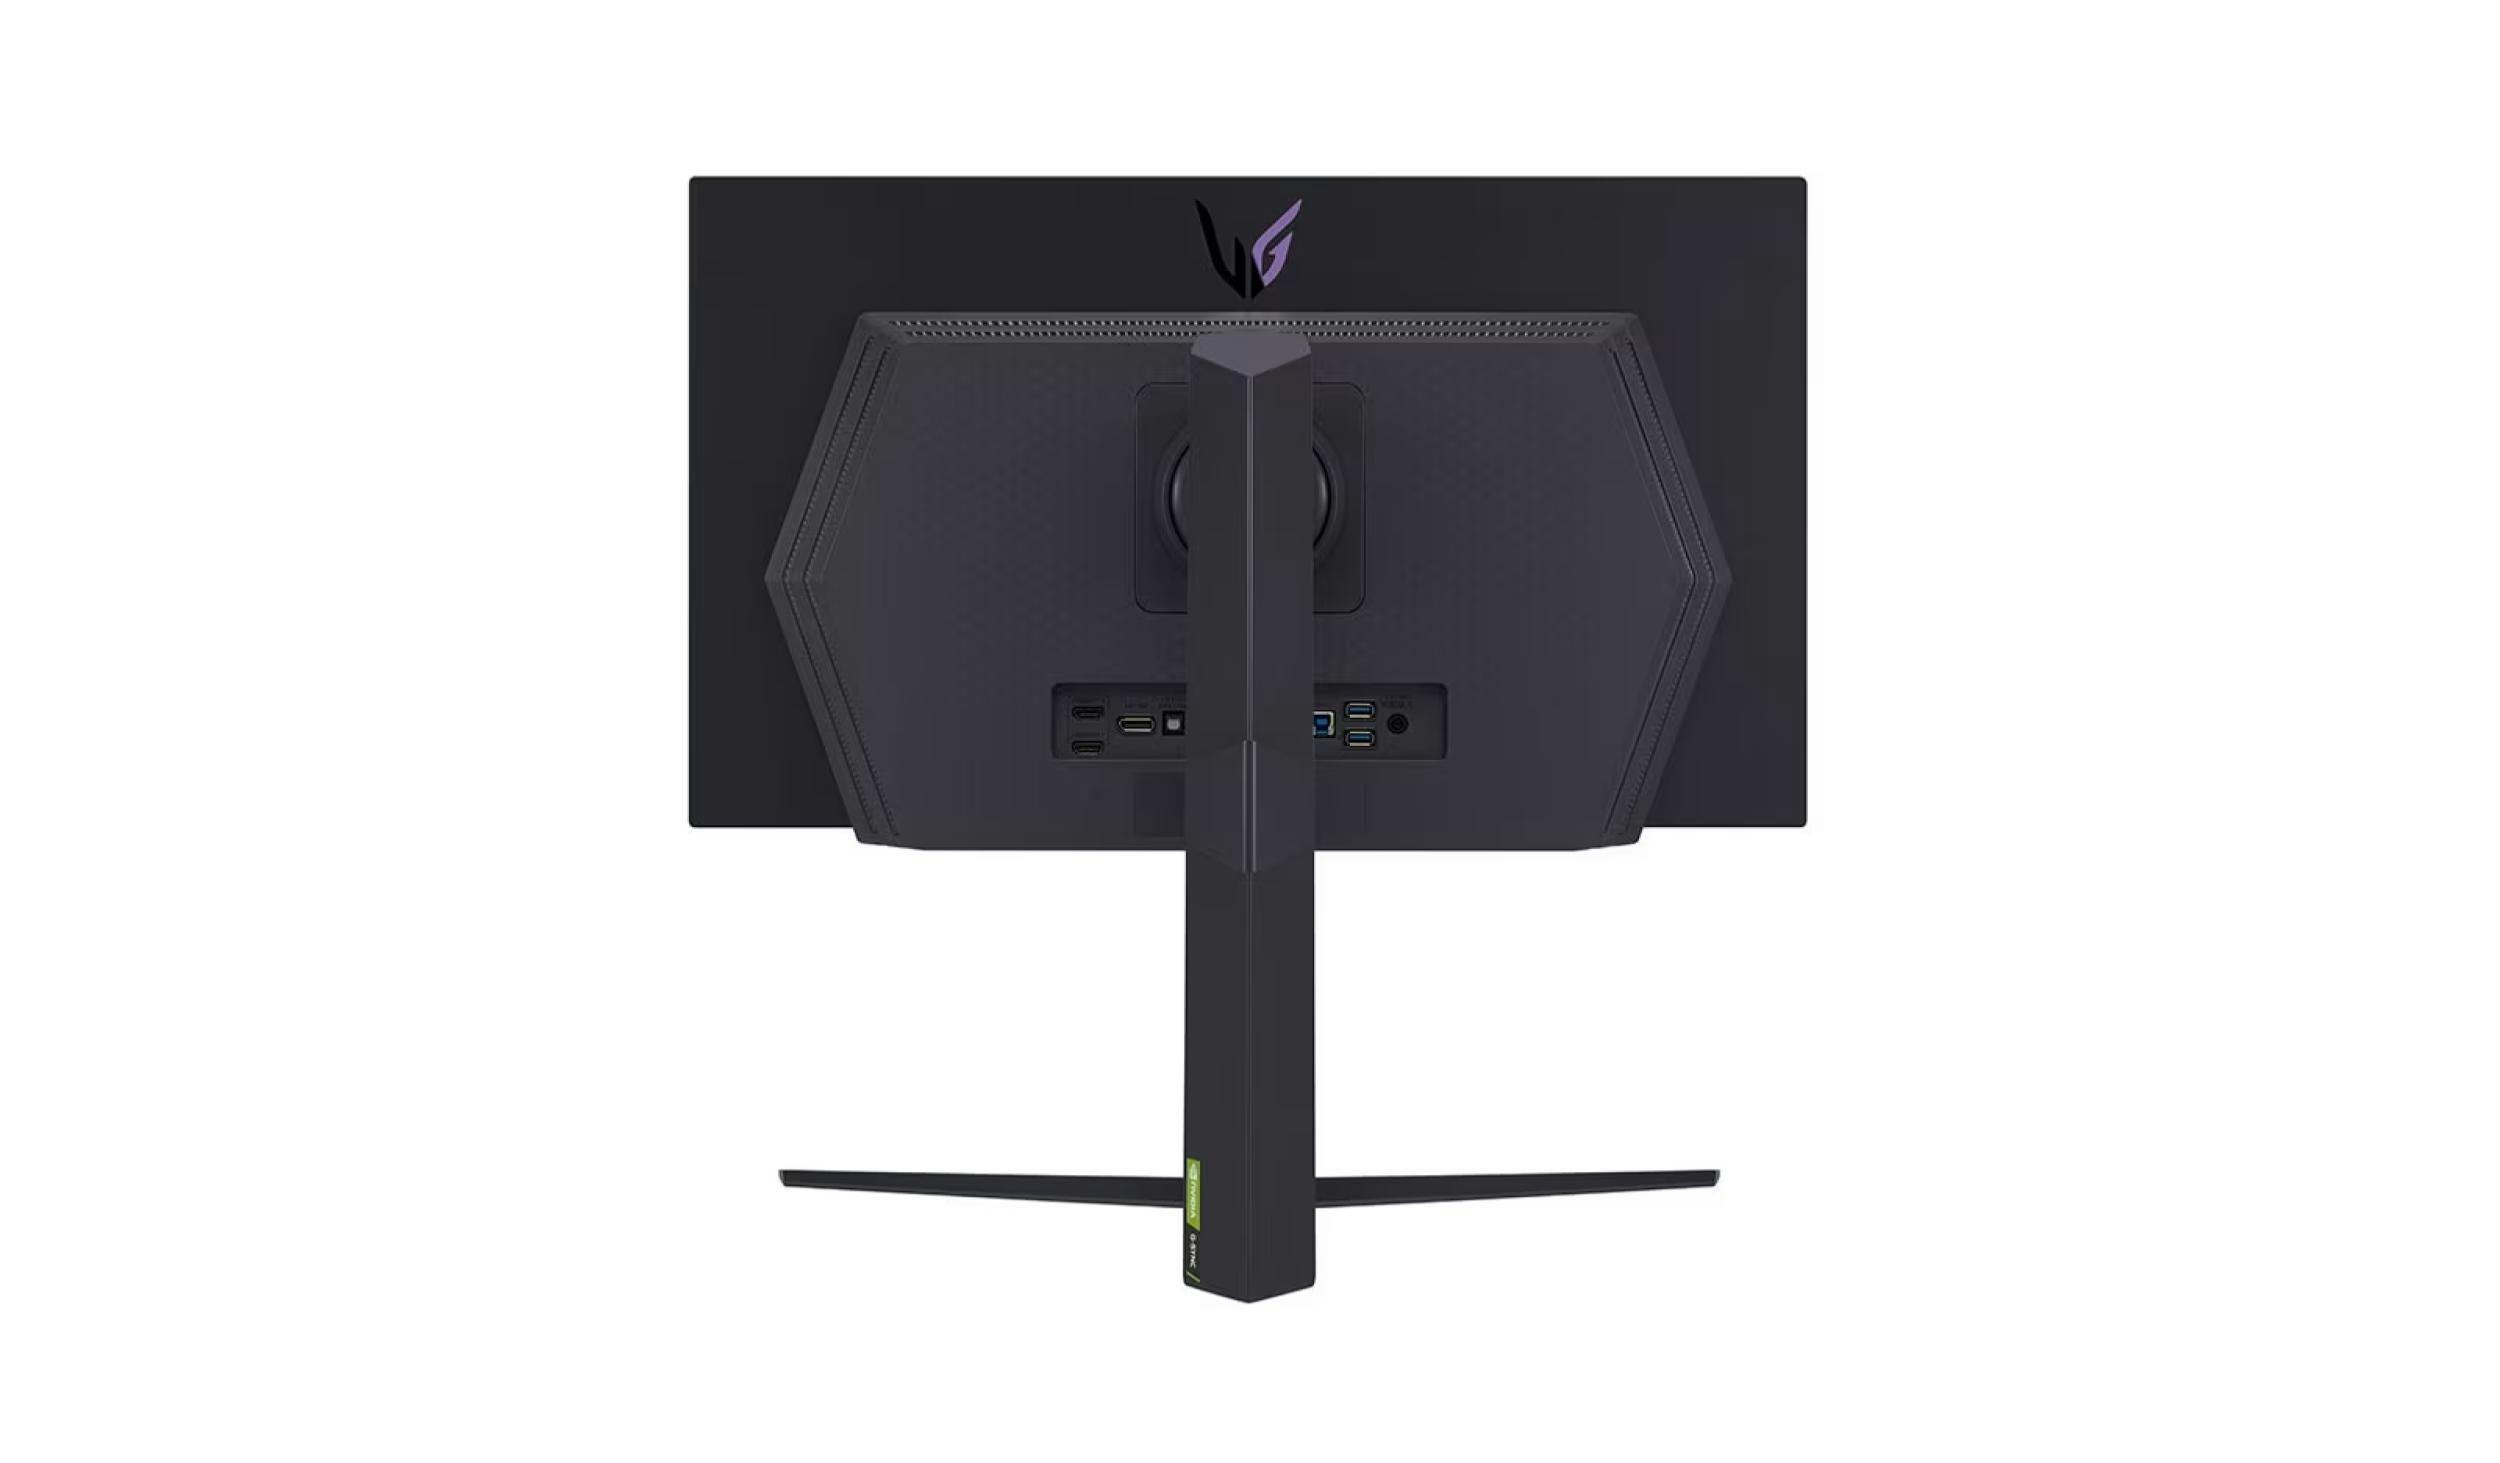 LG UltraGear™ OLED Monitor 27, 27GR95QE-B